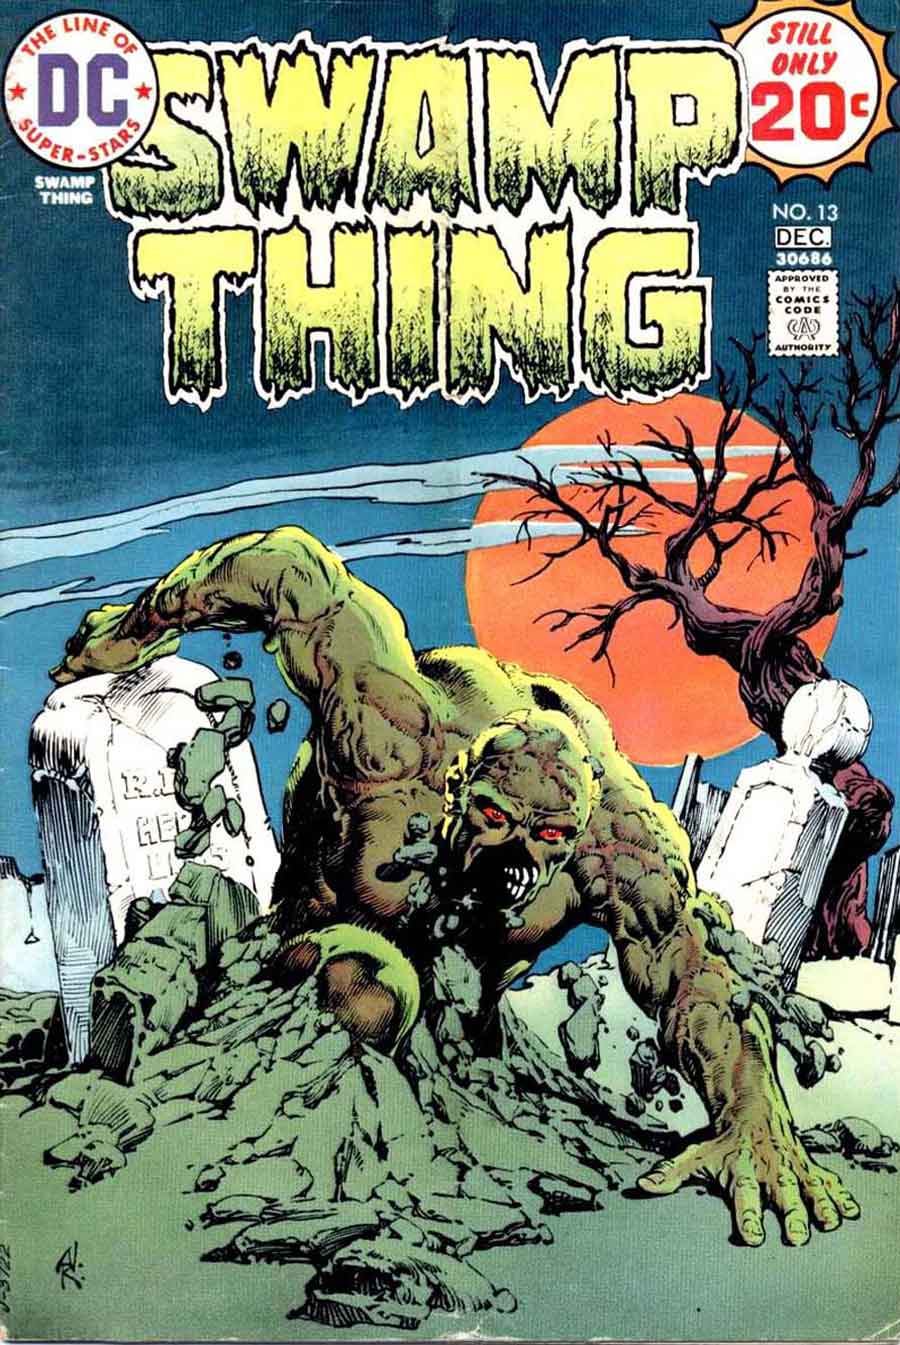 Swamp Thing v1 #13 1970s bronze age dc comic book cover art by Nestor Redondo